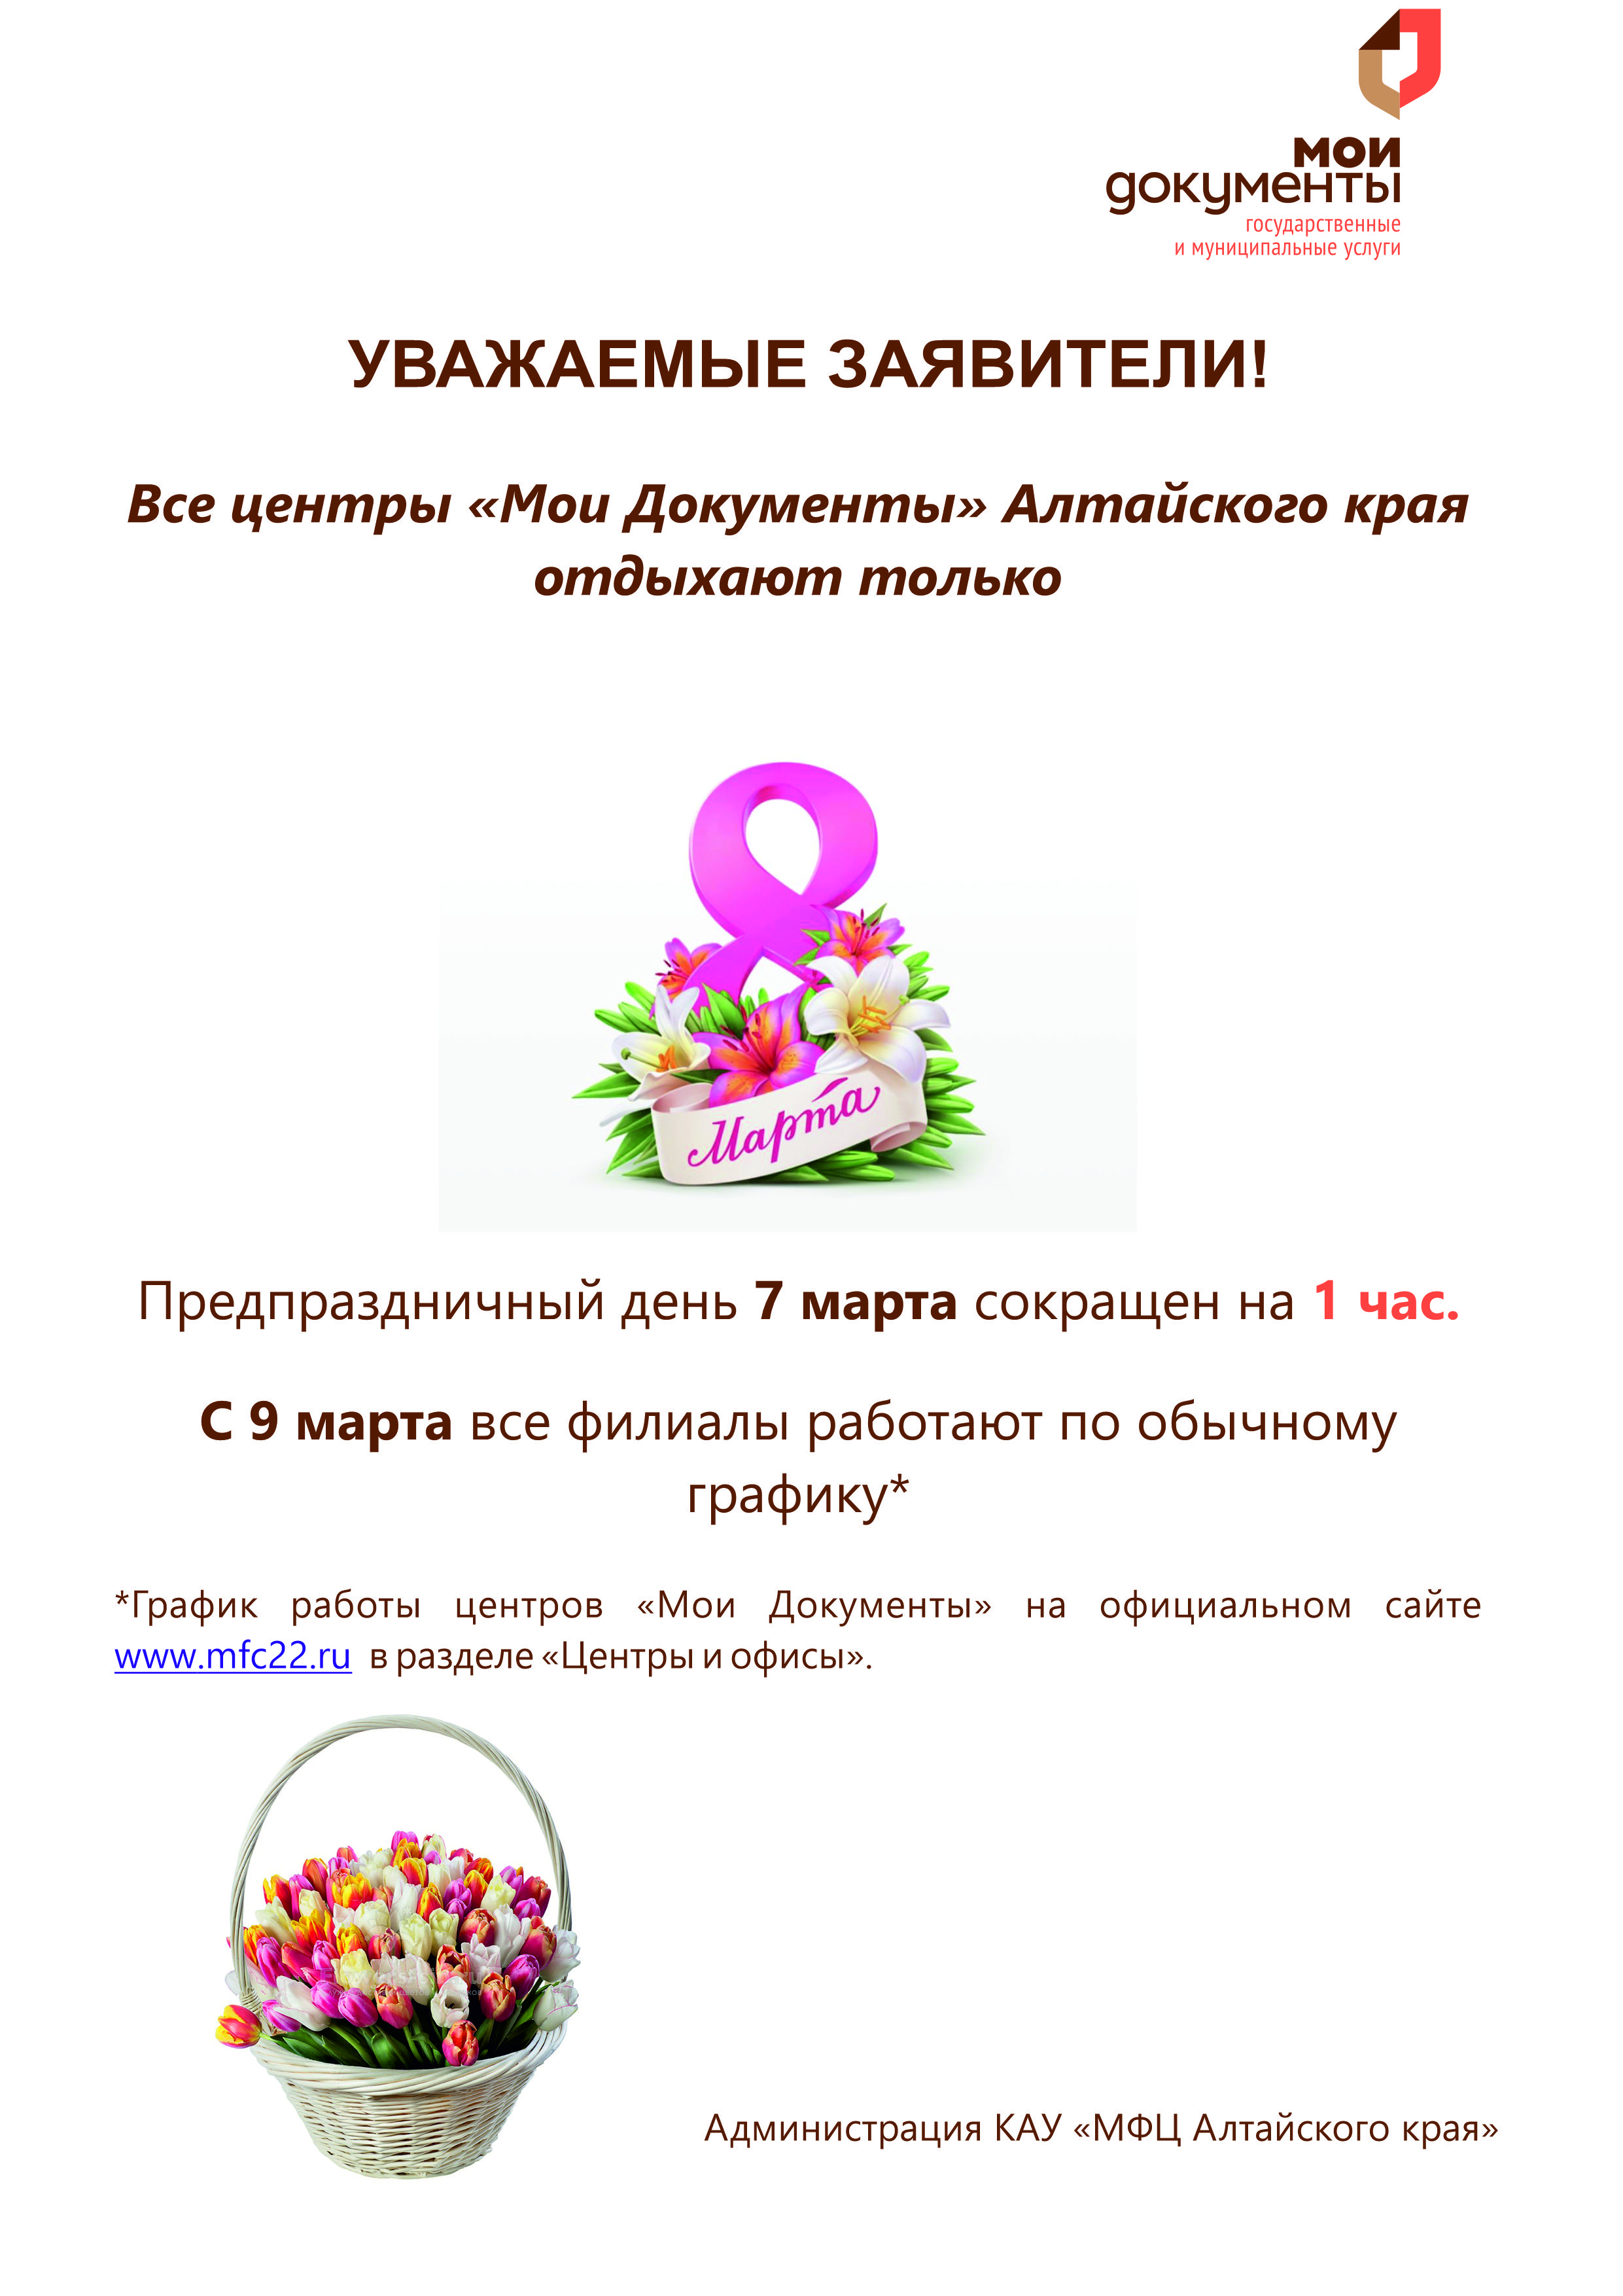 Ремонт диванов 8 марта сервис